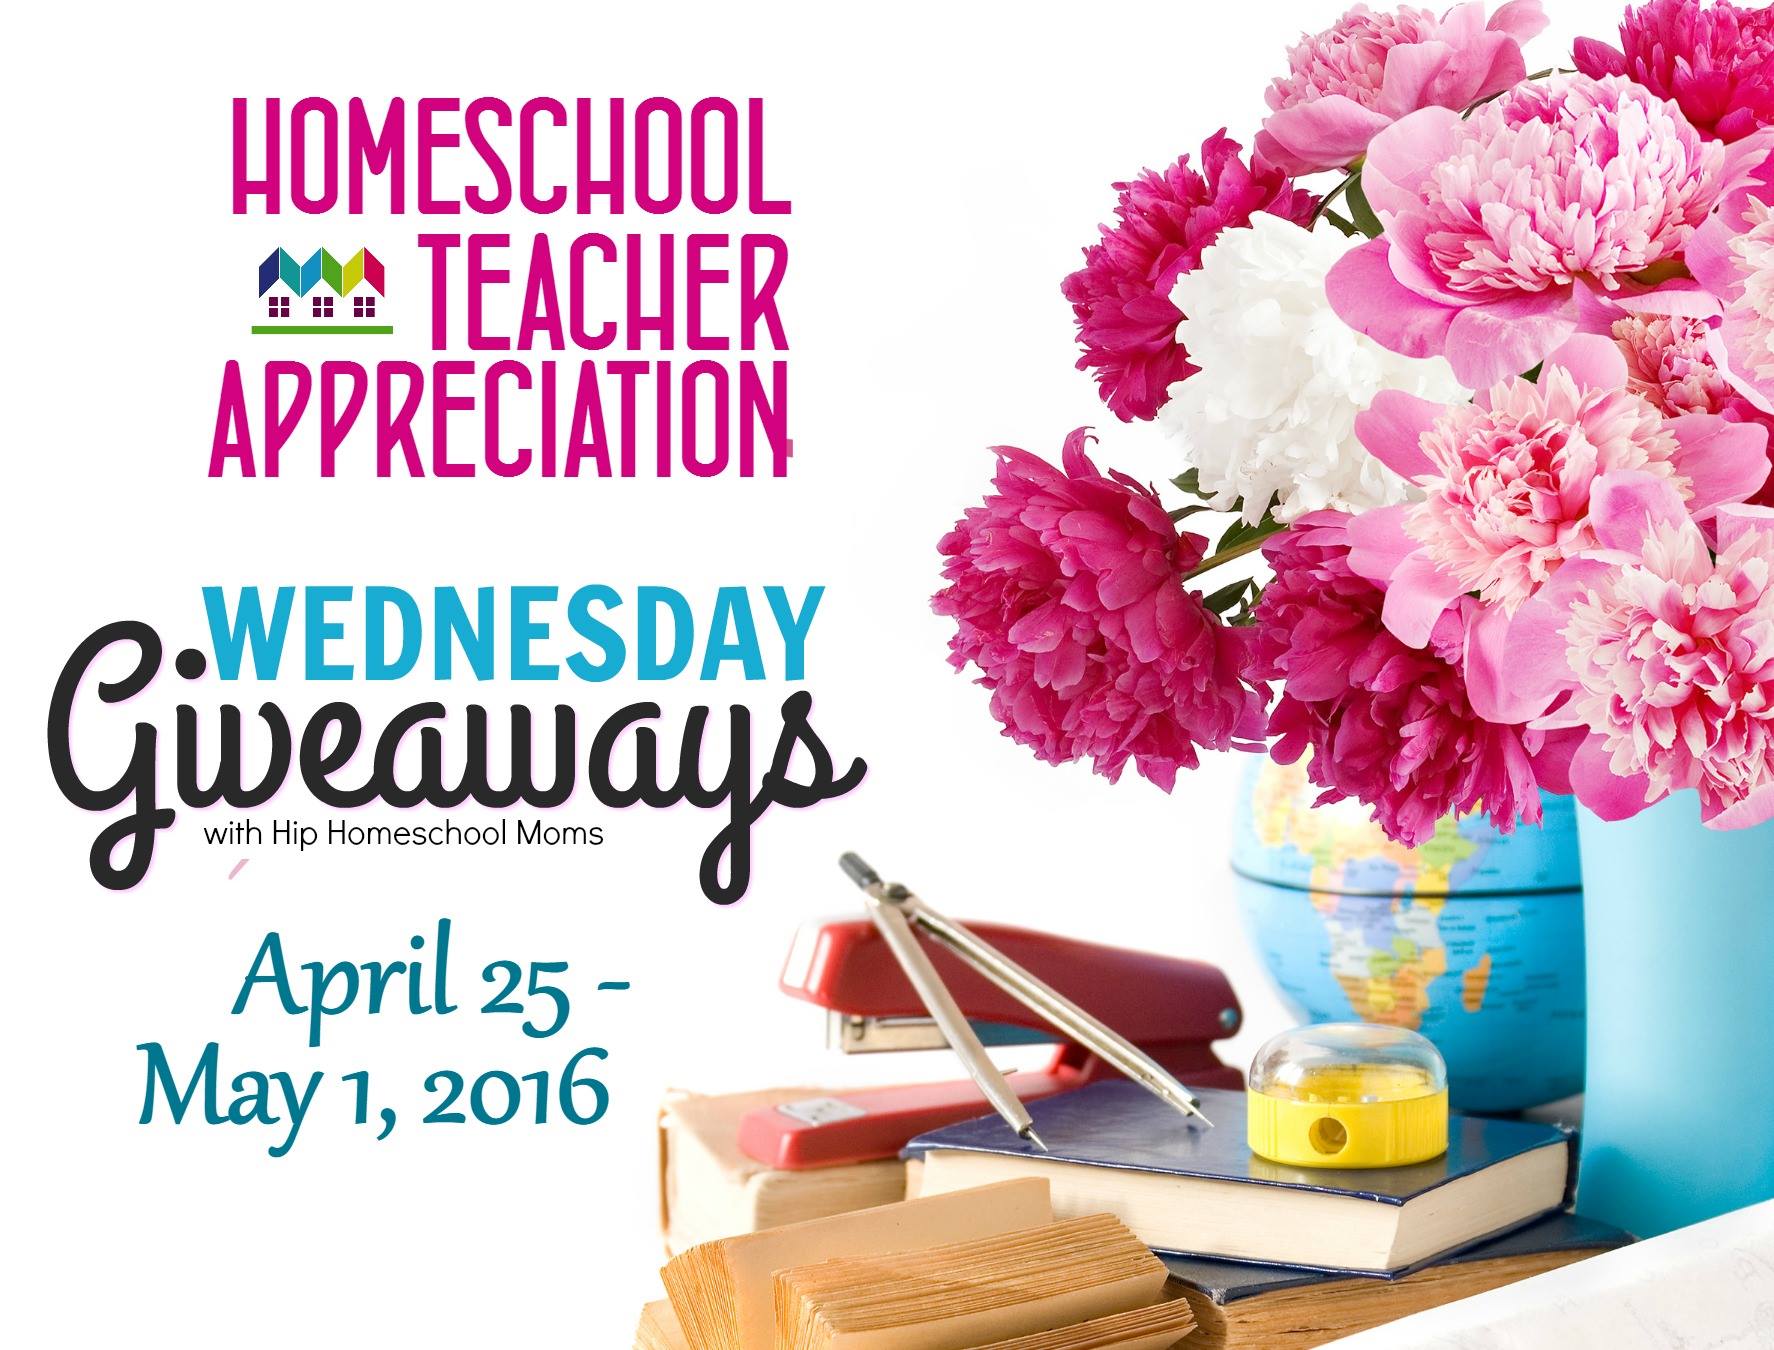 Wednesday’s Giveaways for Homeschool Teacher Appreciation Week